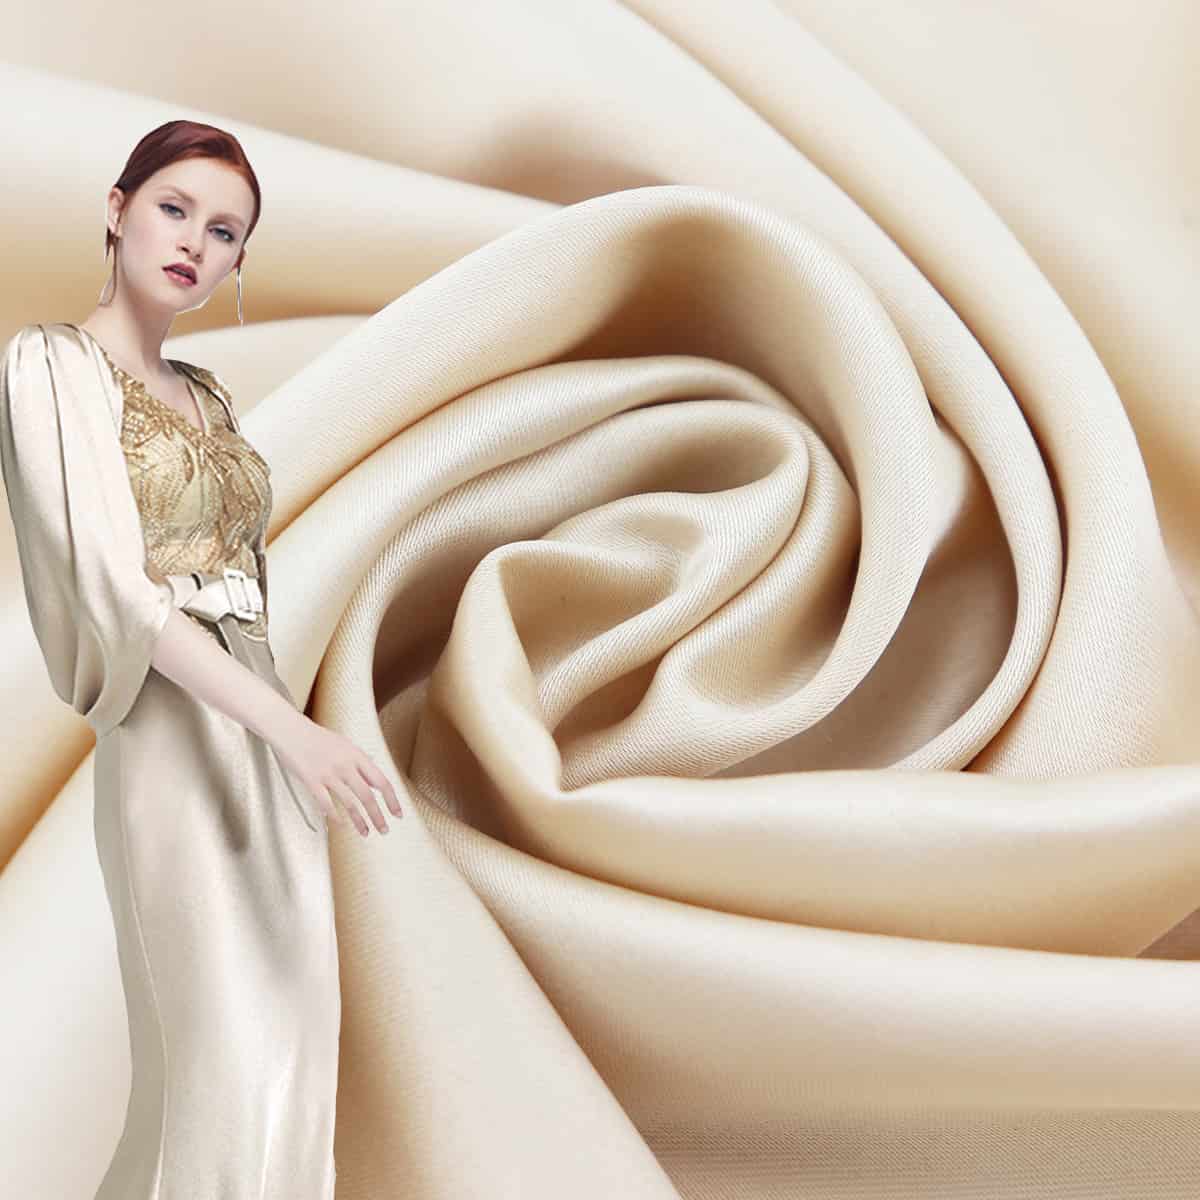 Silk Tencel Satin (32% Silk, 68% Tencel) - Digital Fabric Printing  Specialists in the UK